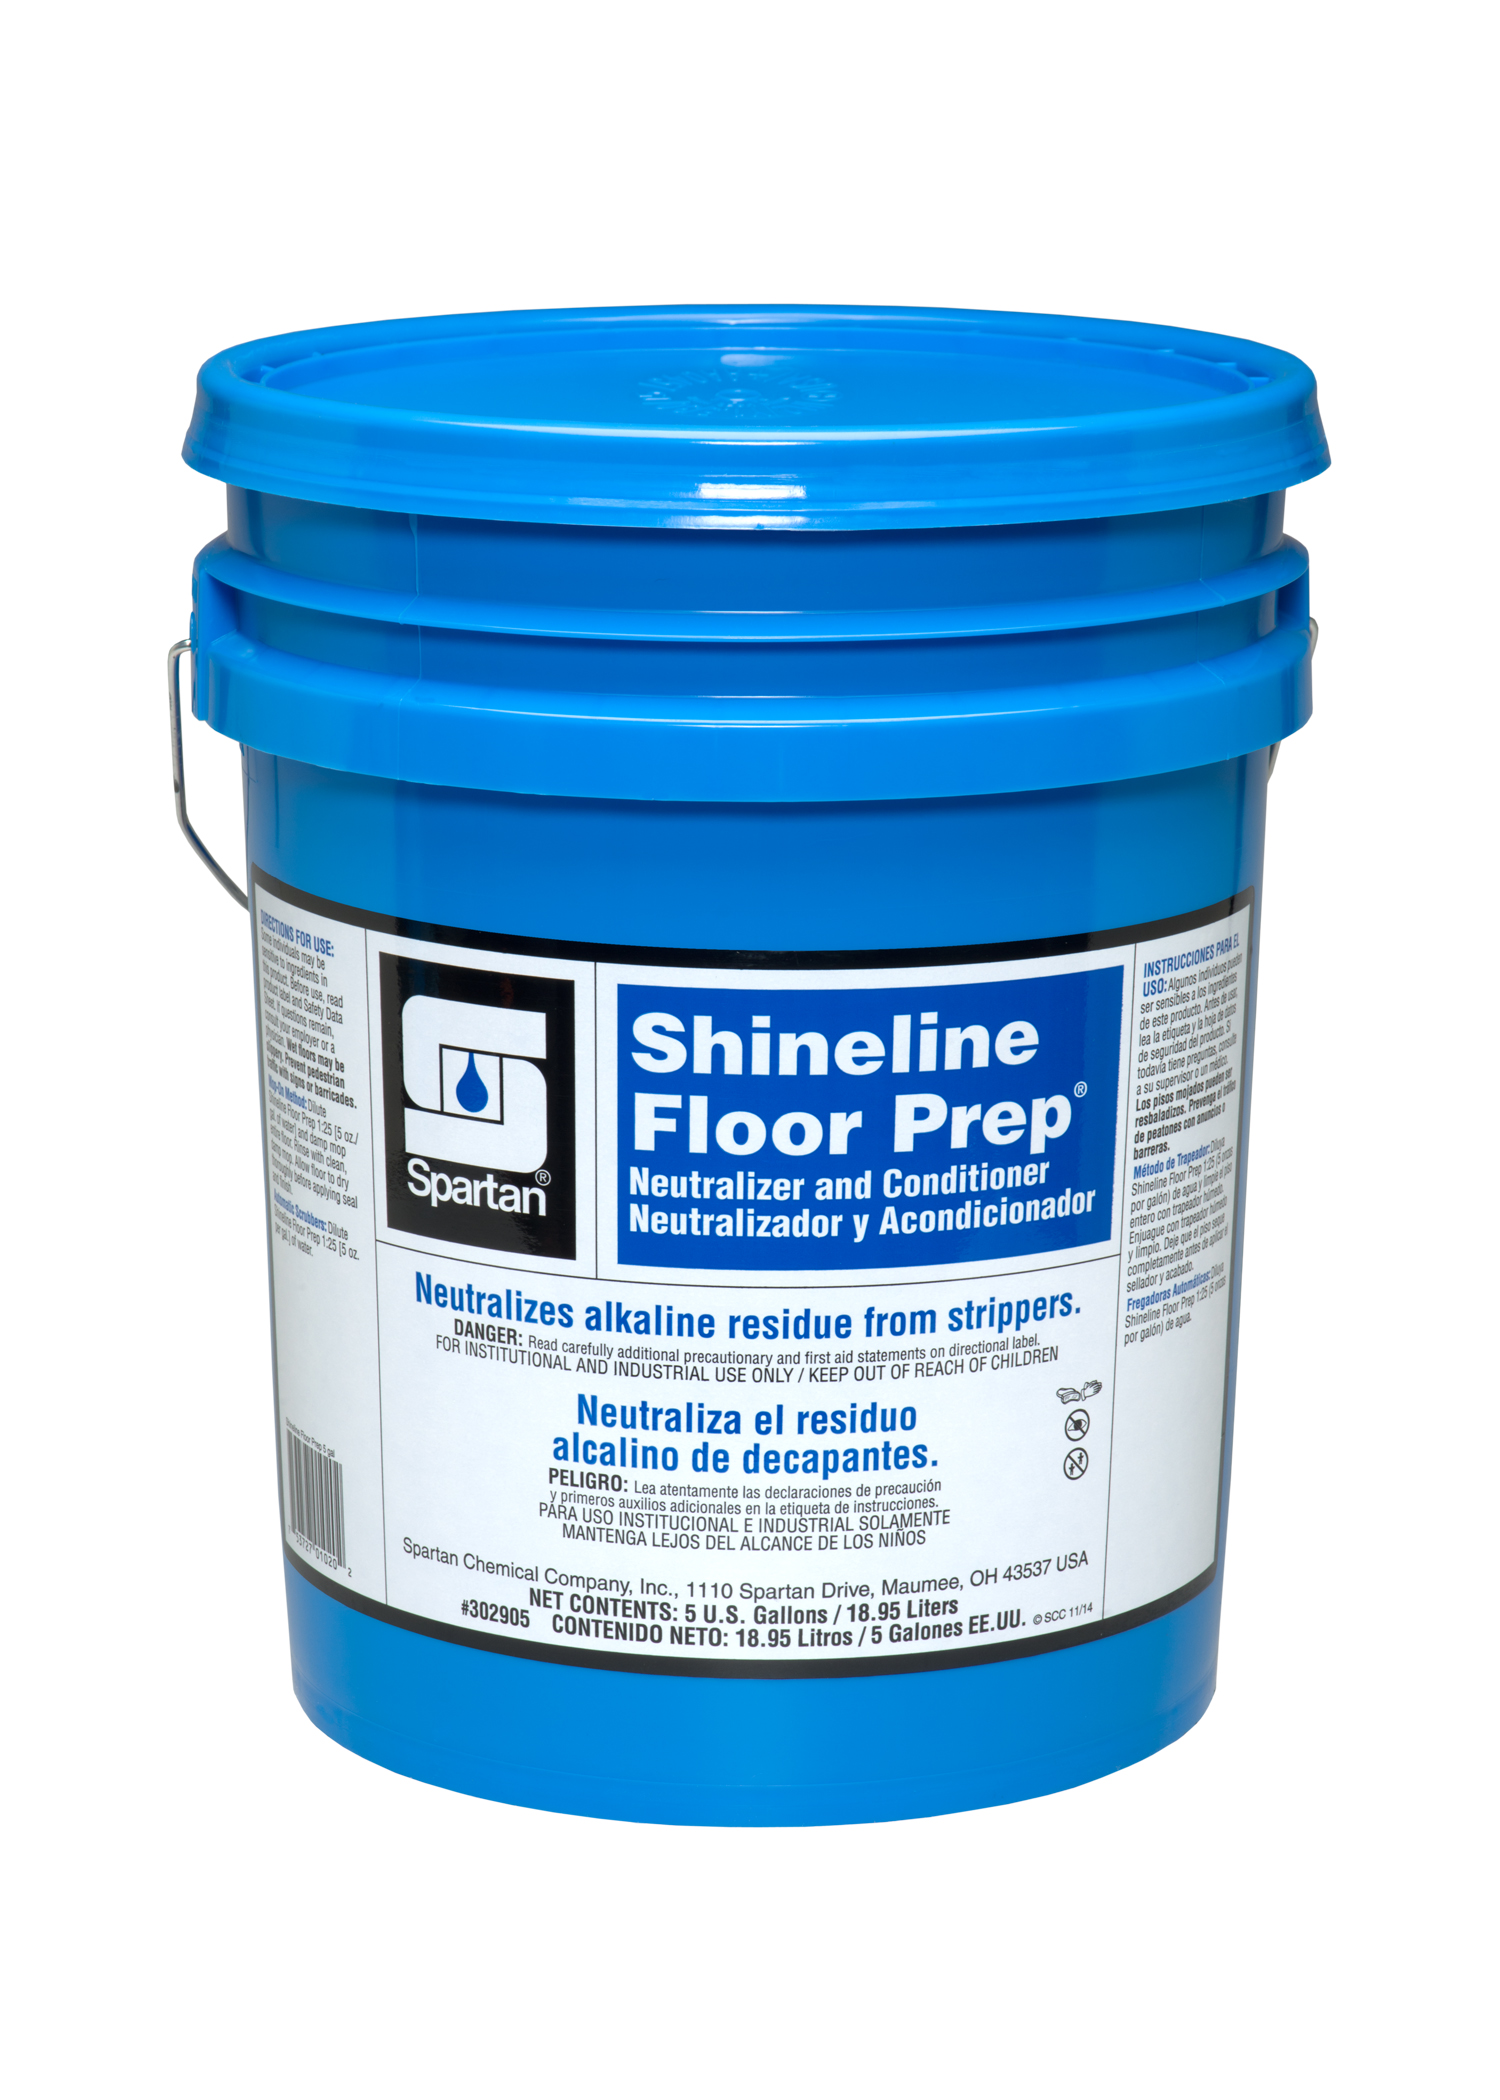 Shineline Floor Prep® 5 gallon pail